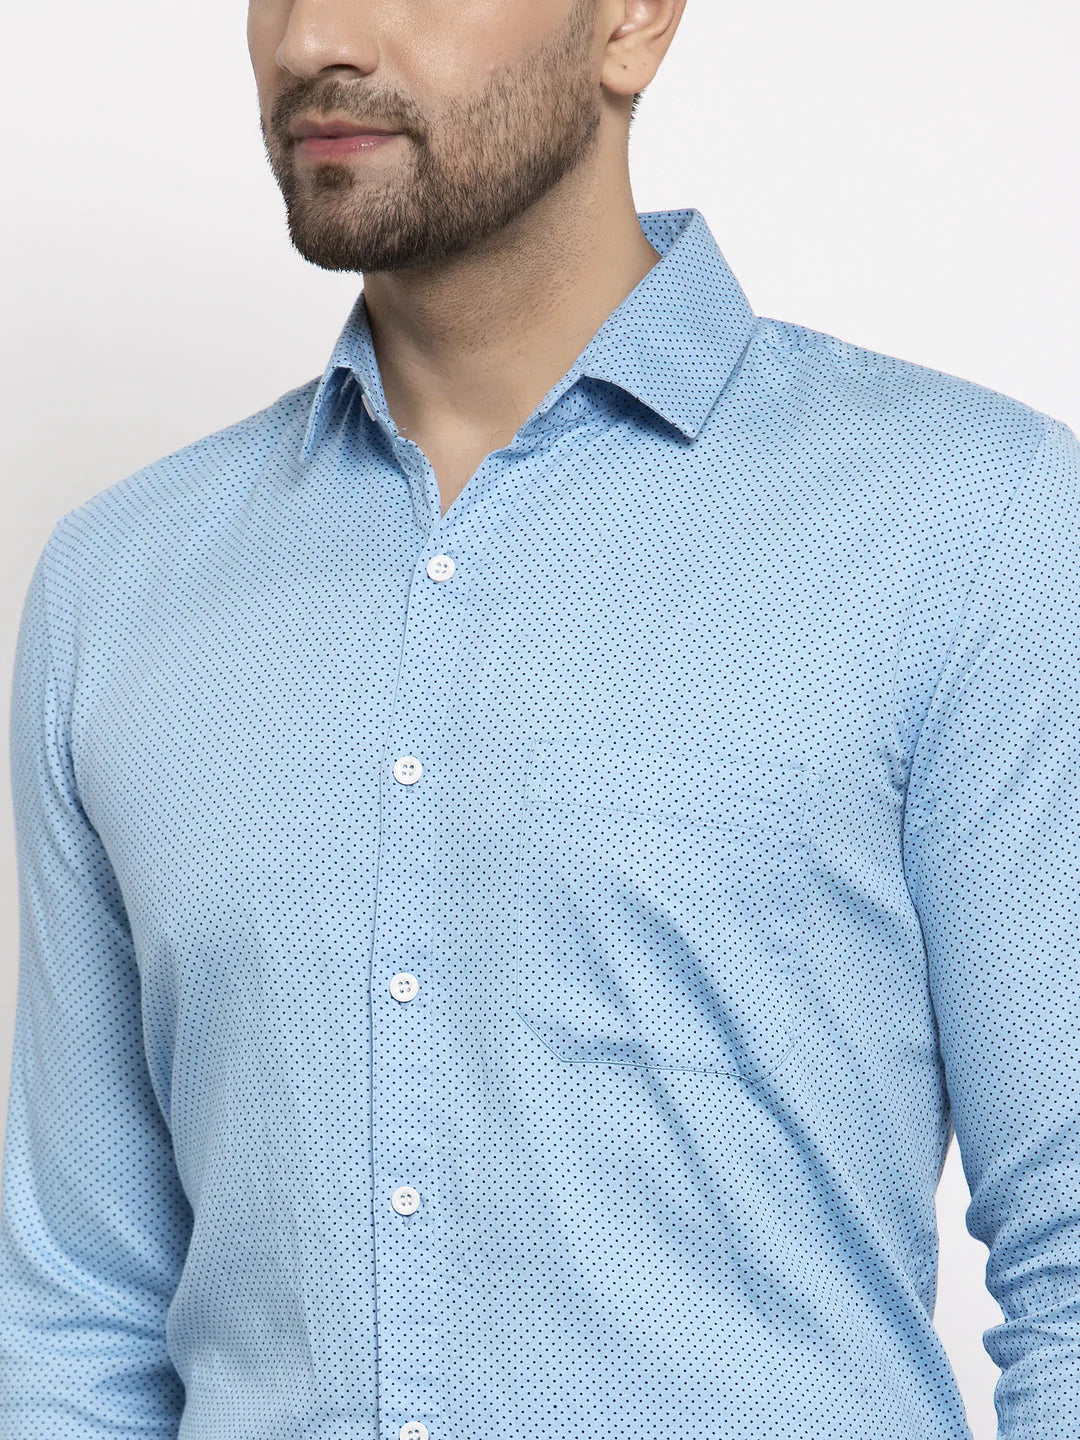 Jainish Blue Men's Cotton Polka Dots Formal Shirts ( SF 736Sky )